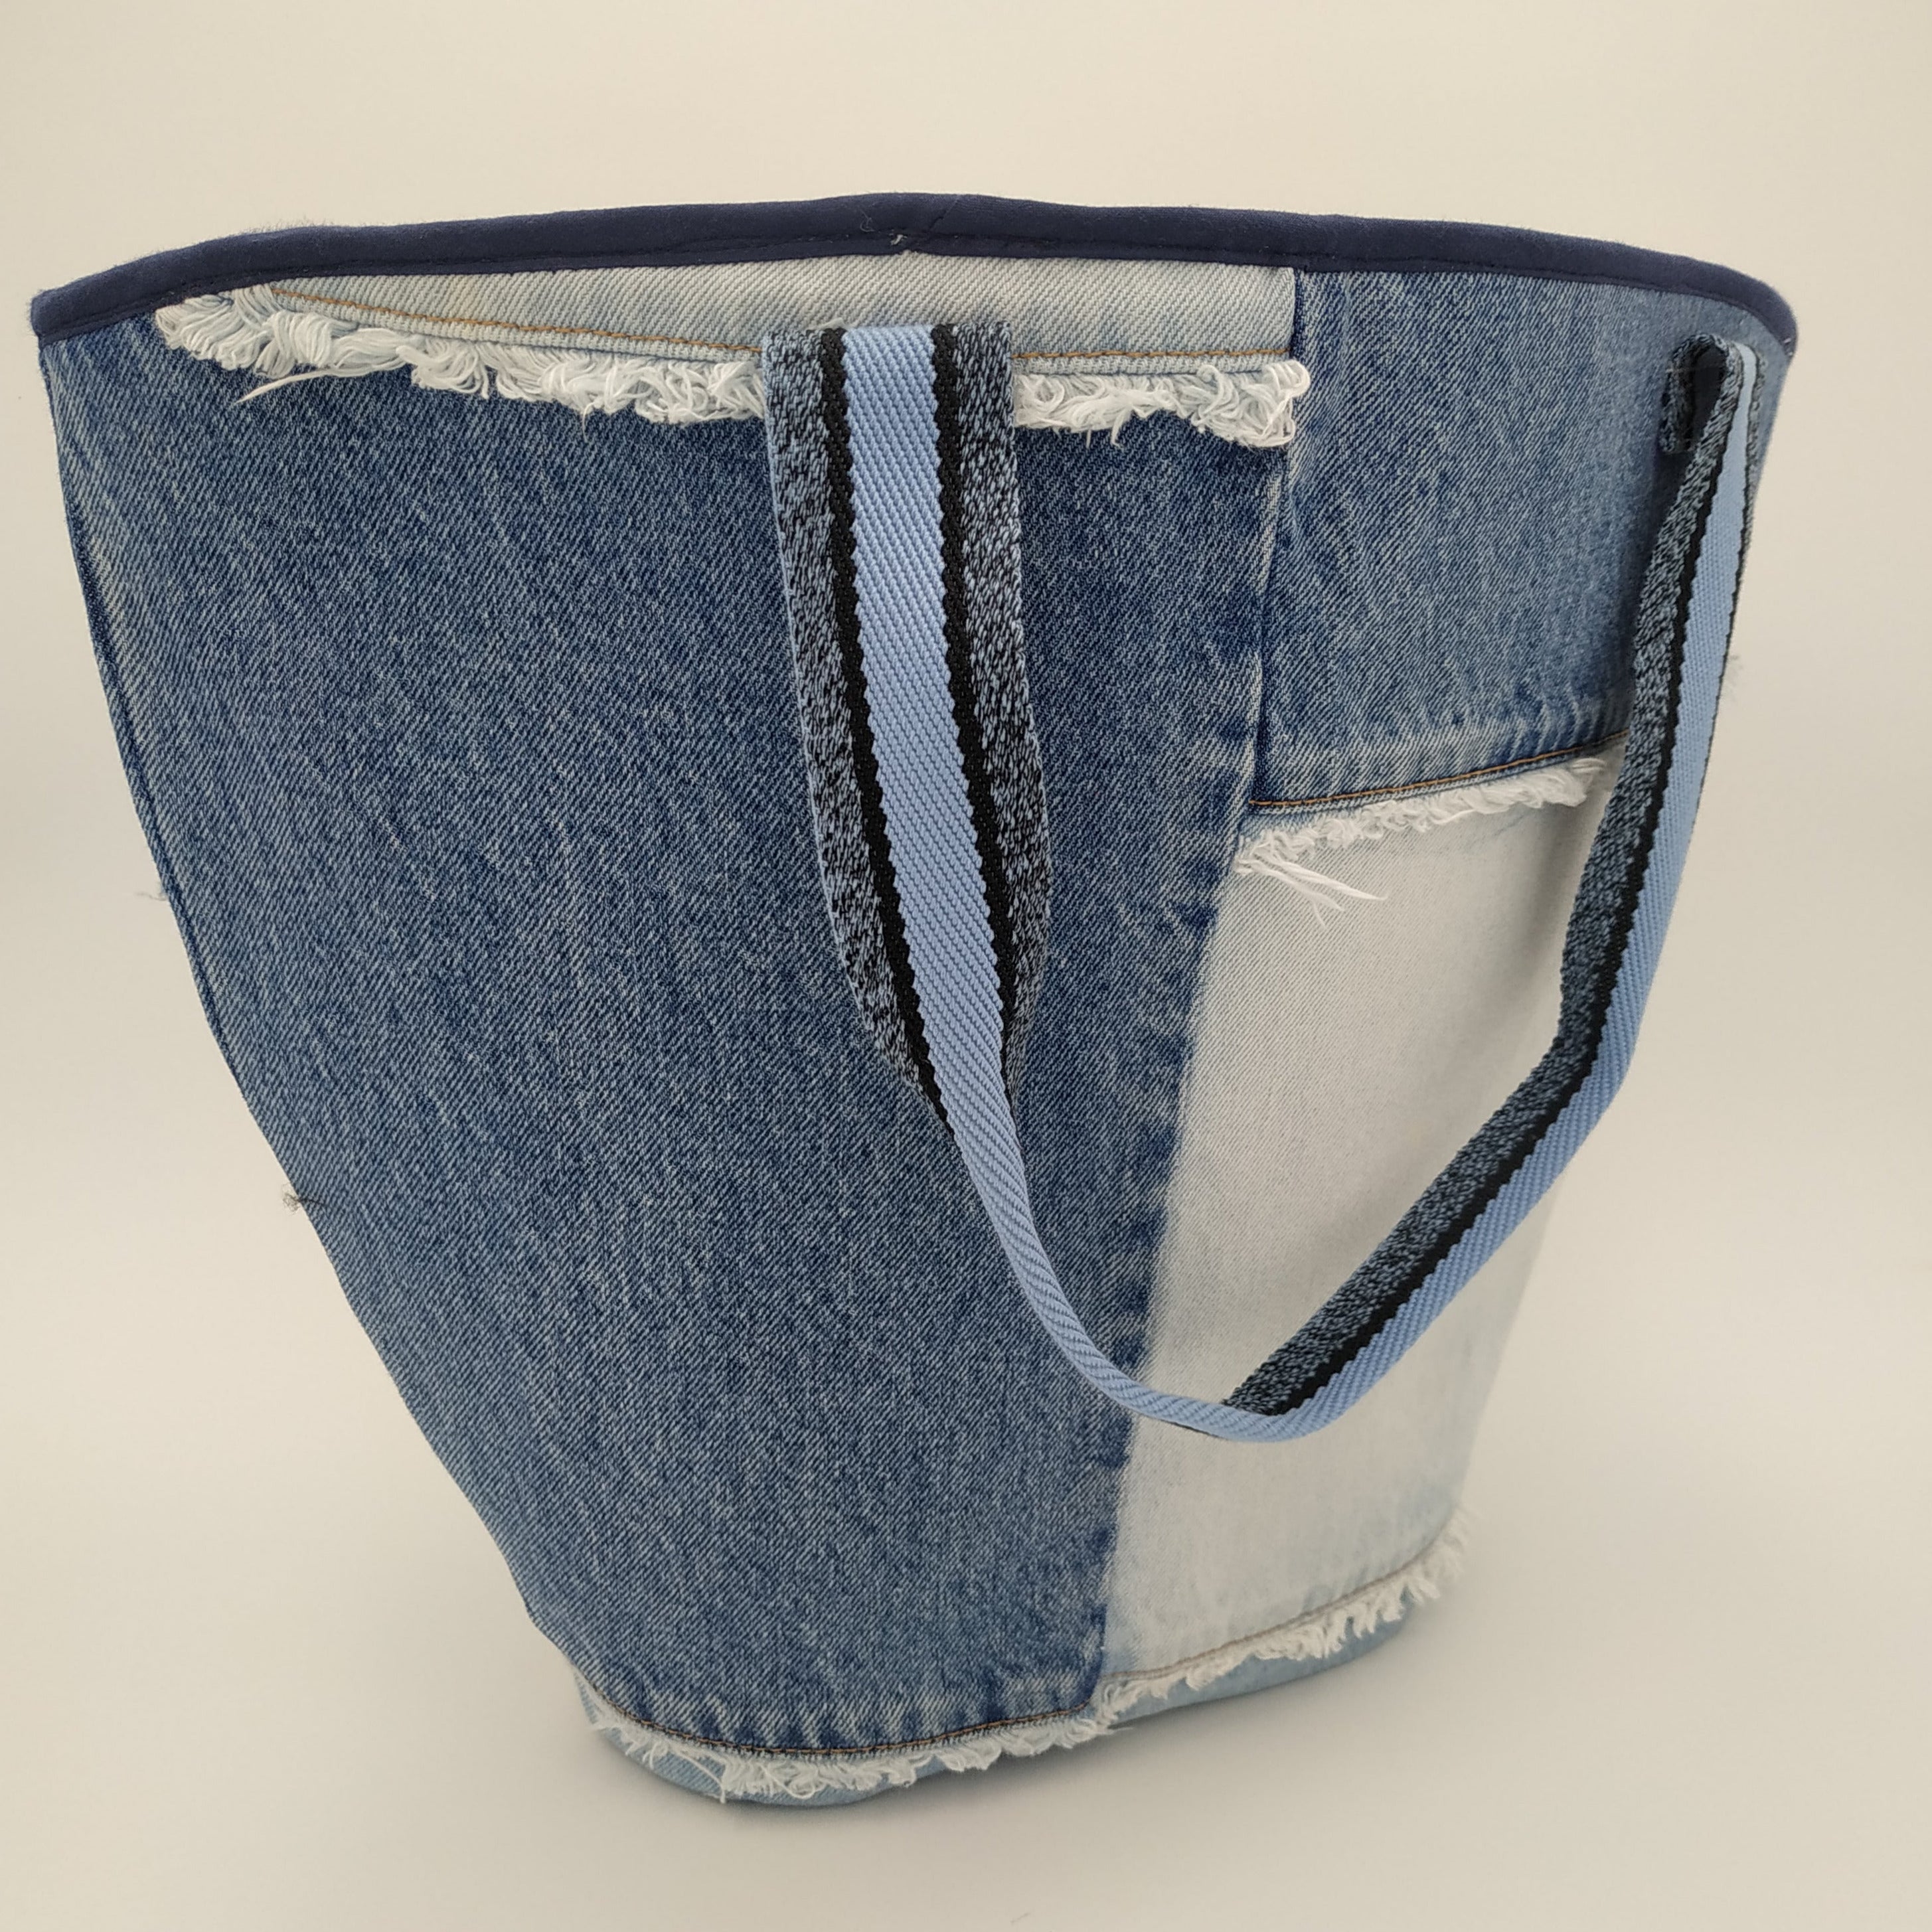 Panier de plage en jeans recyclés - vue de dos